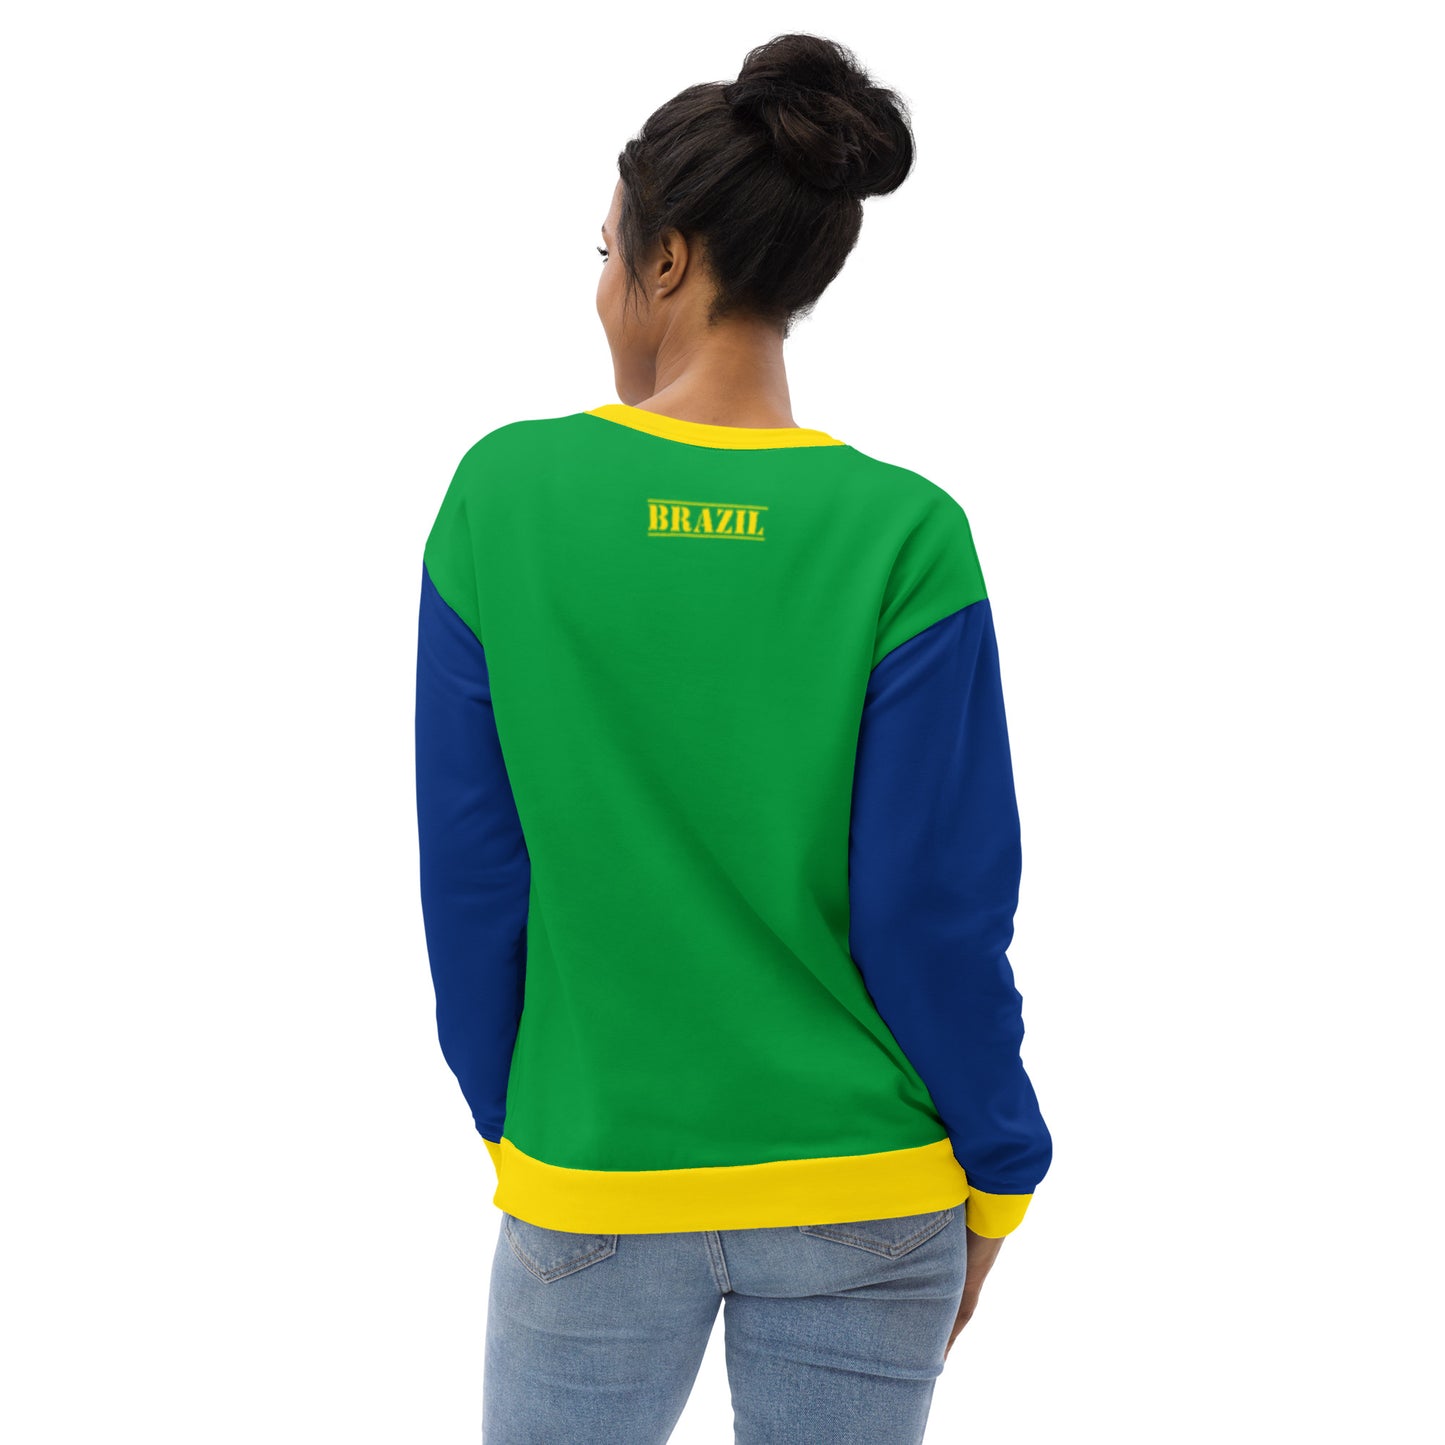 back Brazil Sweatshirt / Brazil Clothes Style / Brazilian Flag Color